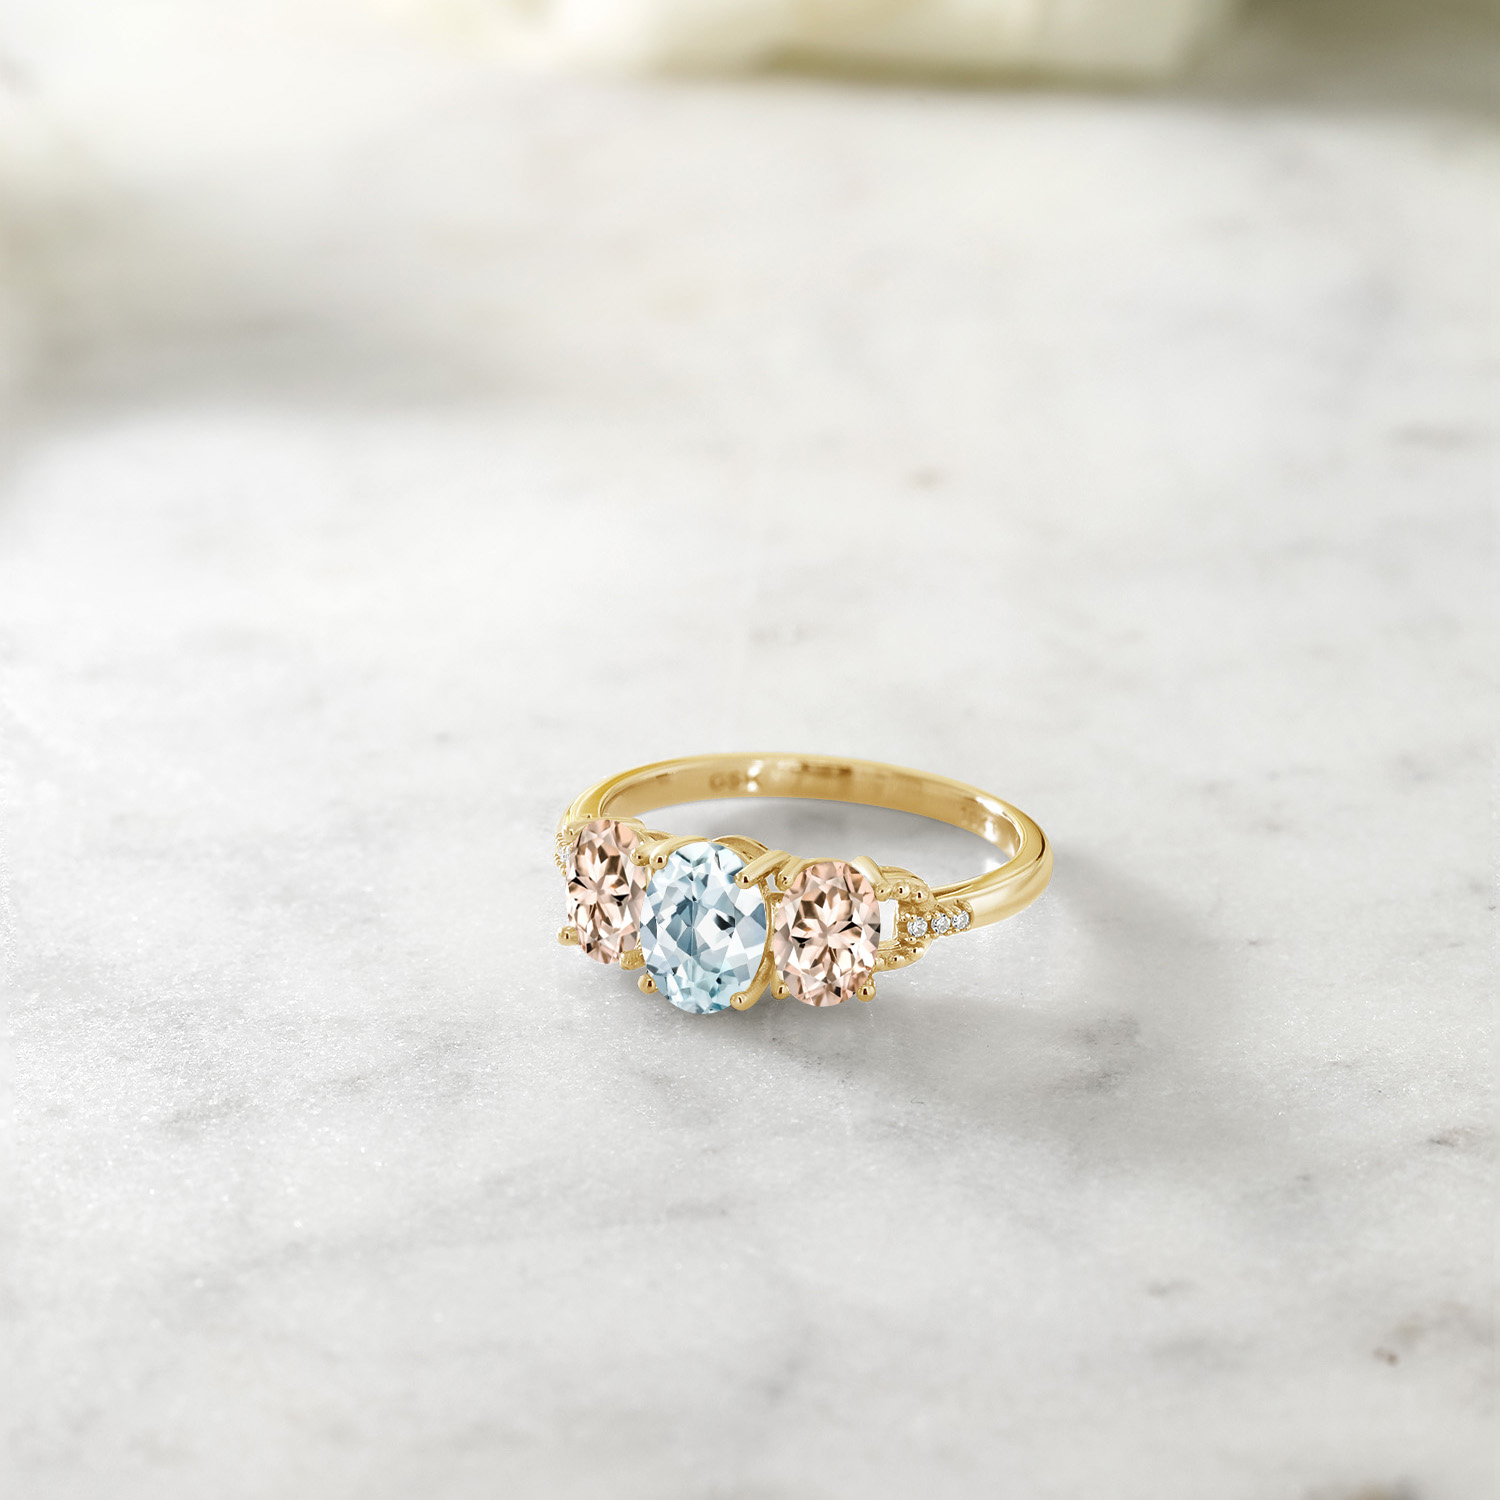 Gem Stone King 1.77 Ct Oval Sky Blue Aquamarine Peach Morganite 10K Yellow Gold 3-Stone Diamond Engagement Ring